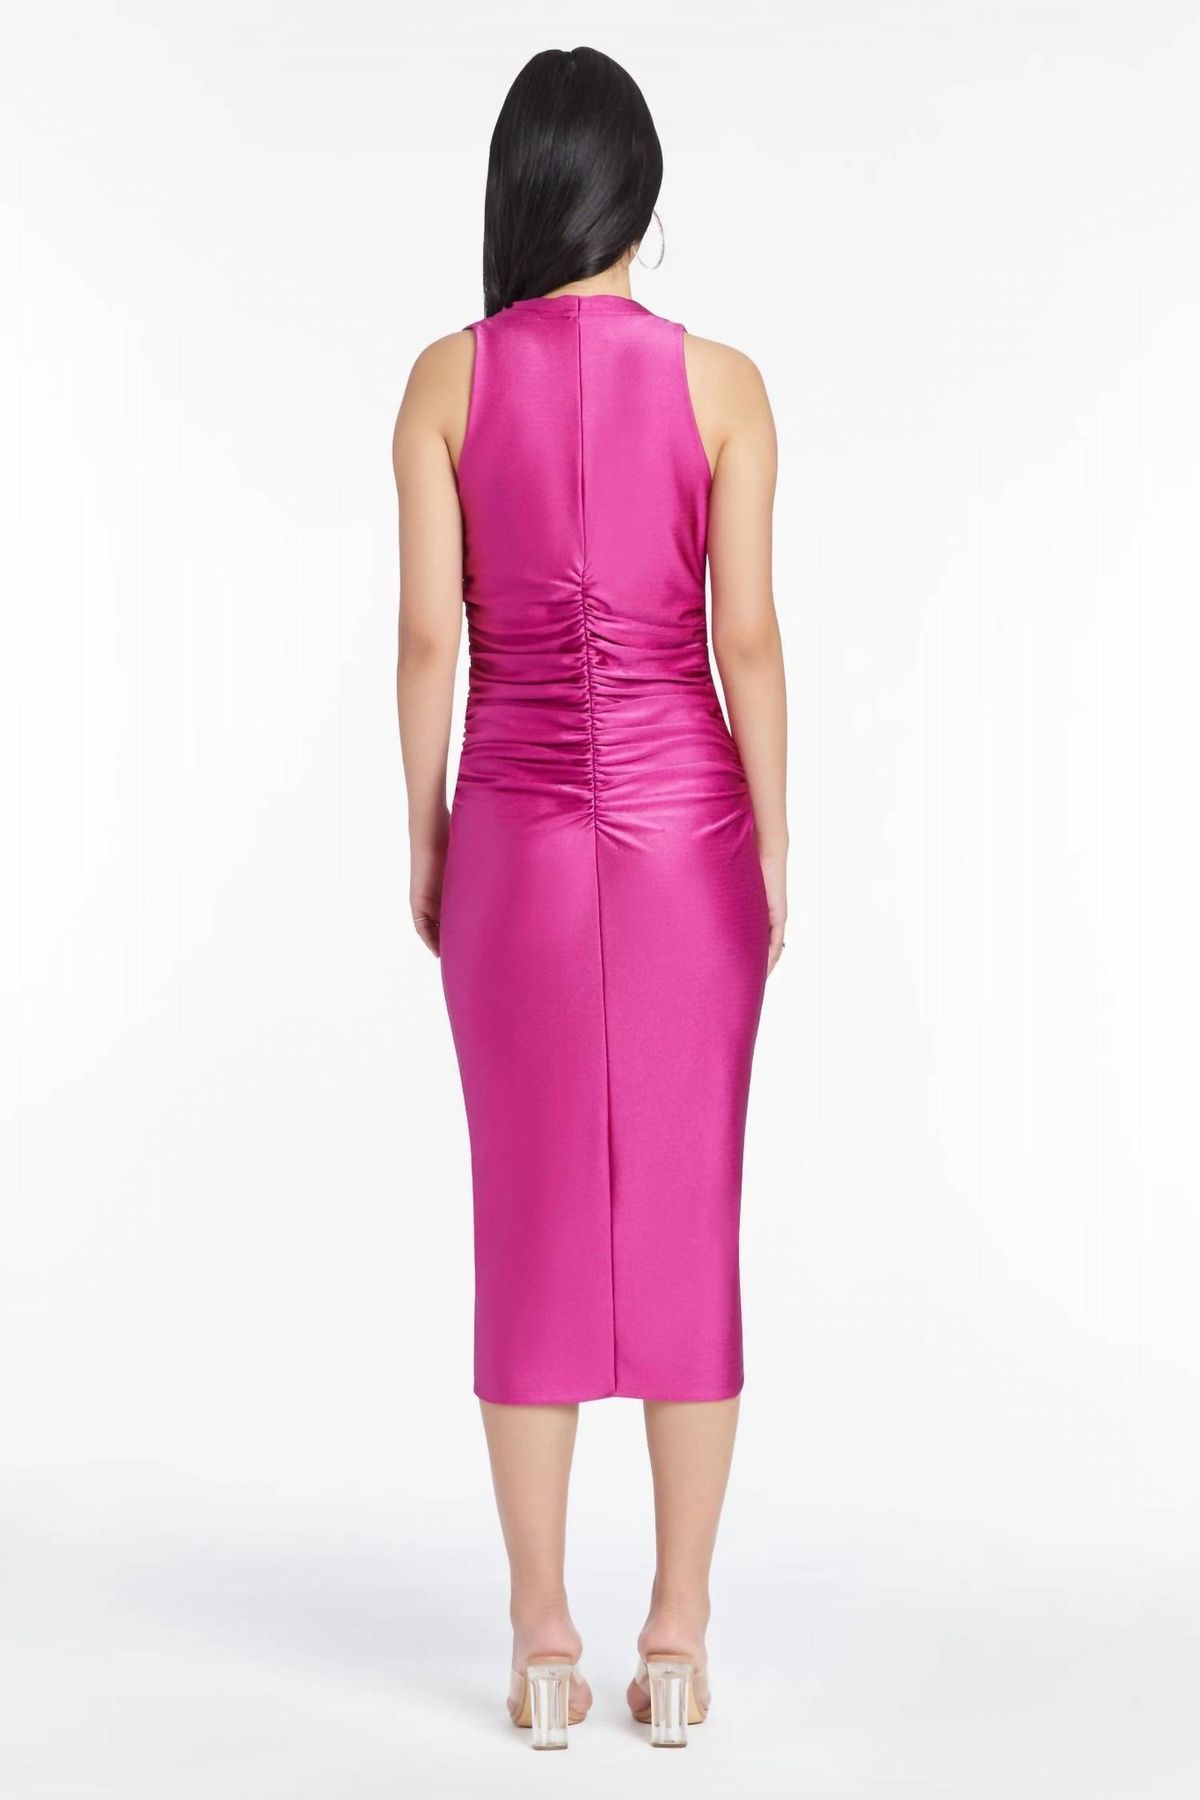 Style 1-1693116390-3236 Amanda Uprichard Size S Nightclub Satin Hot Pink Cocktail Dress on Queenly